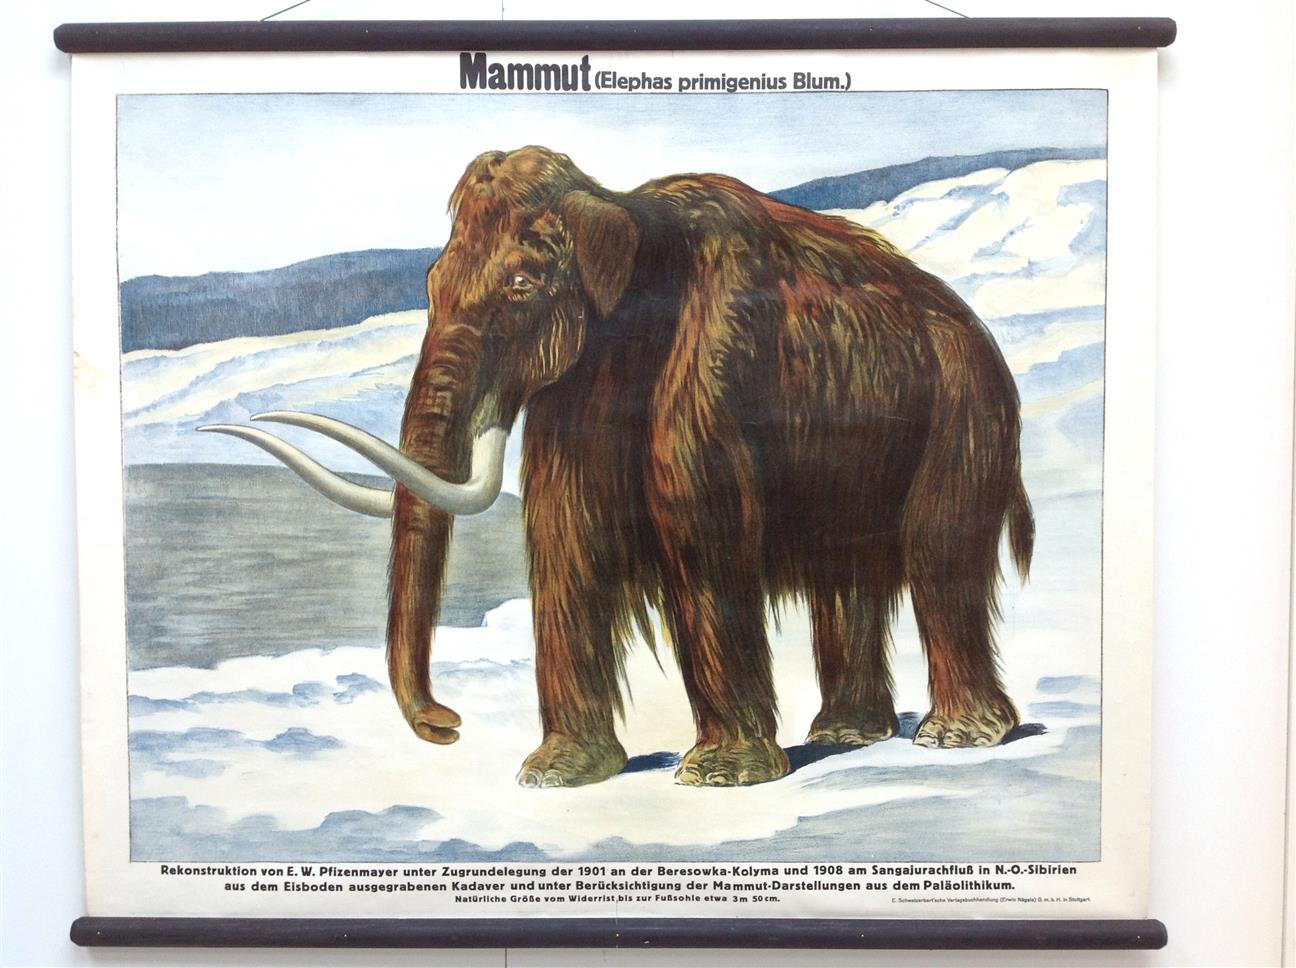 n.n - (SCHOOLPLAAT - SCHOOL POSTER / MAP - LEHRTAFEL) Mammut ( elephas primigenius blum  )